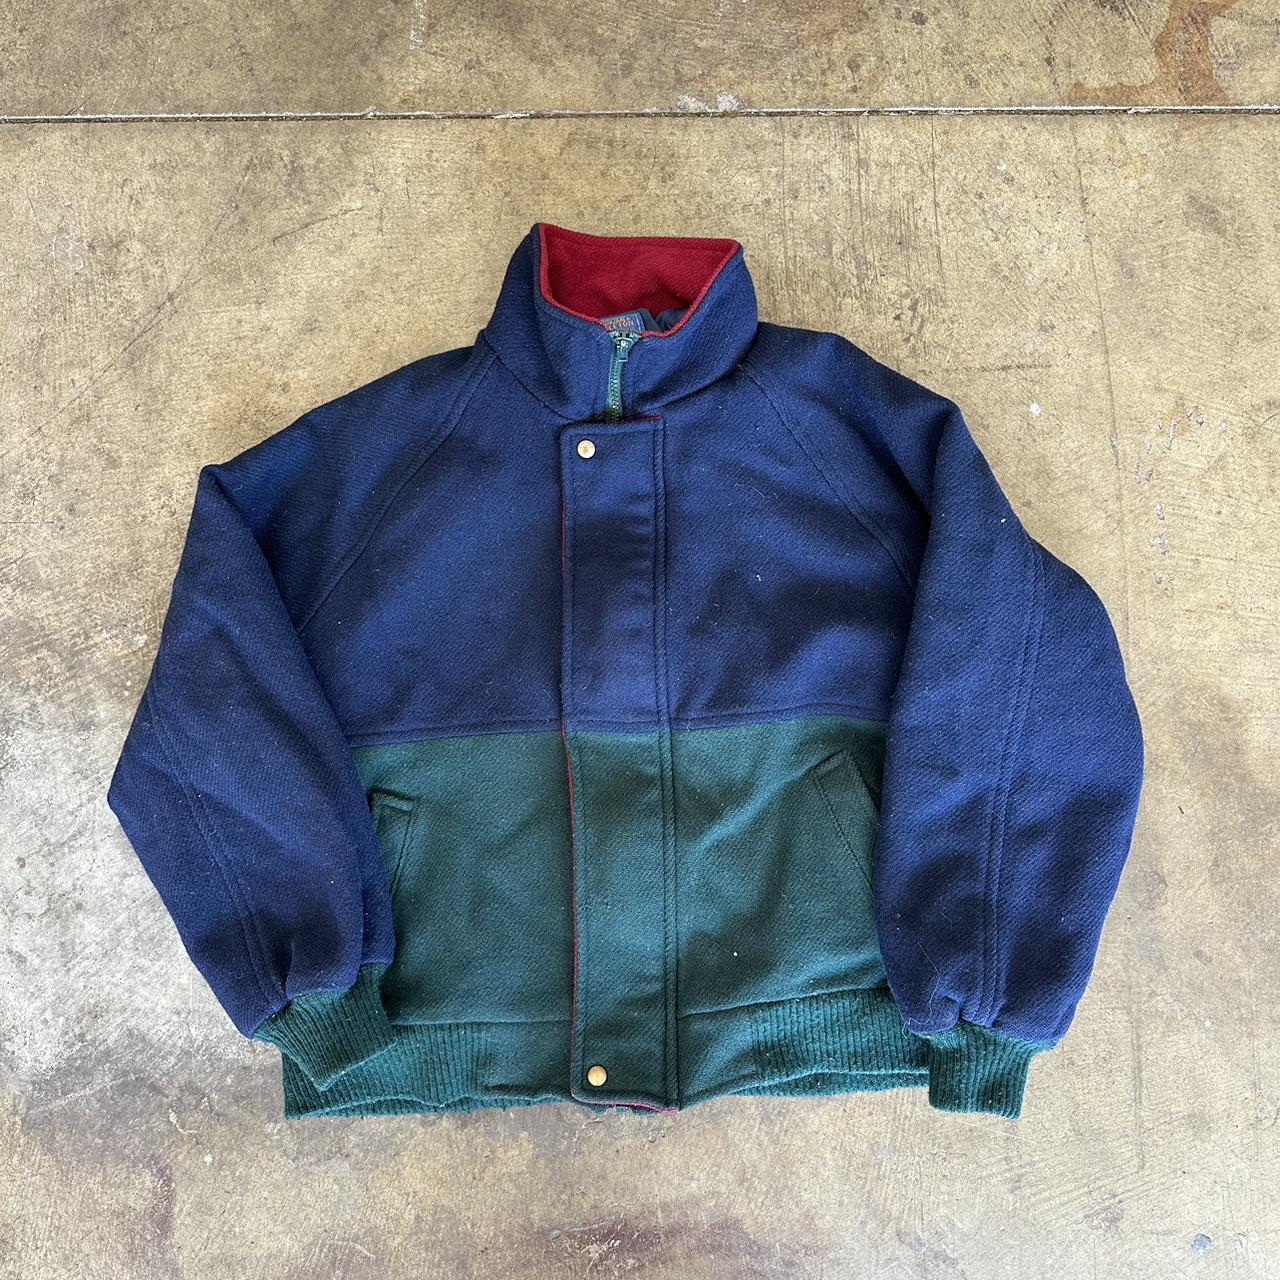 Vintage Pendleton wool jacket - Depop